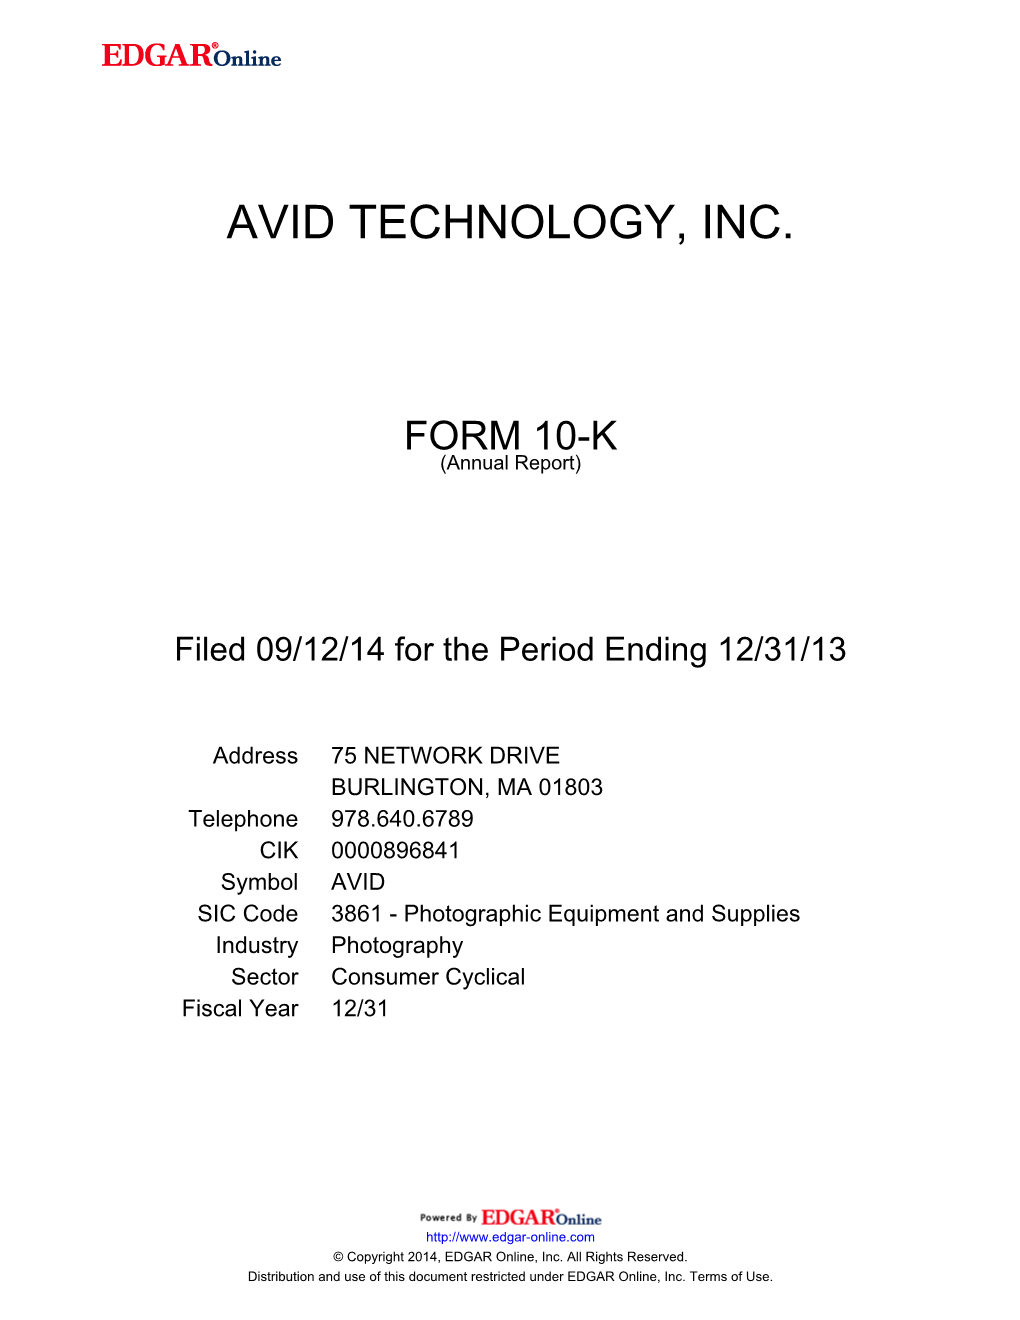 Avid Technology, Inc